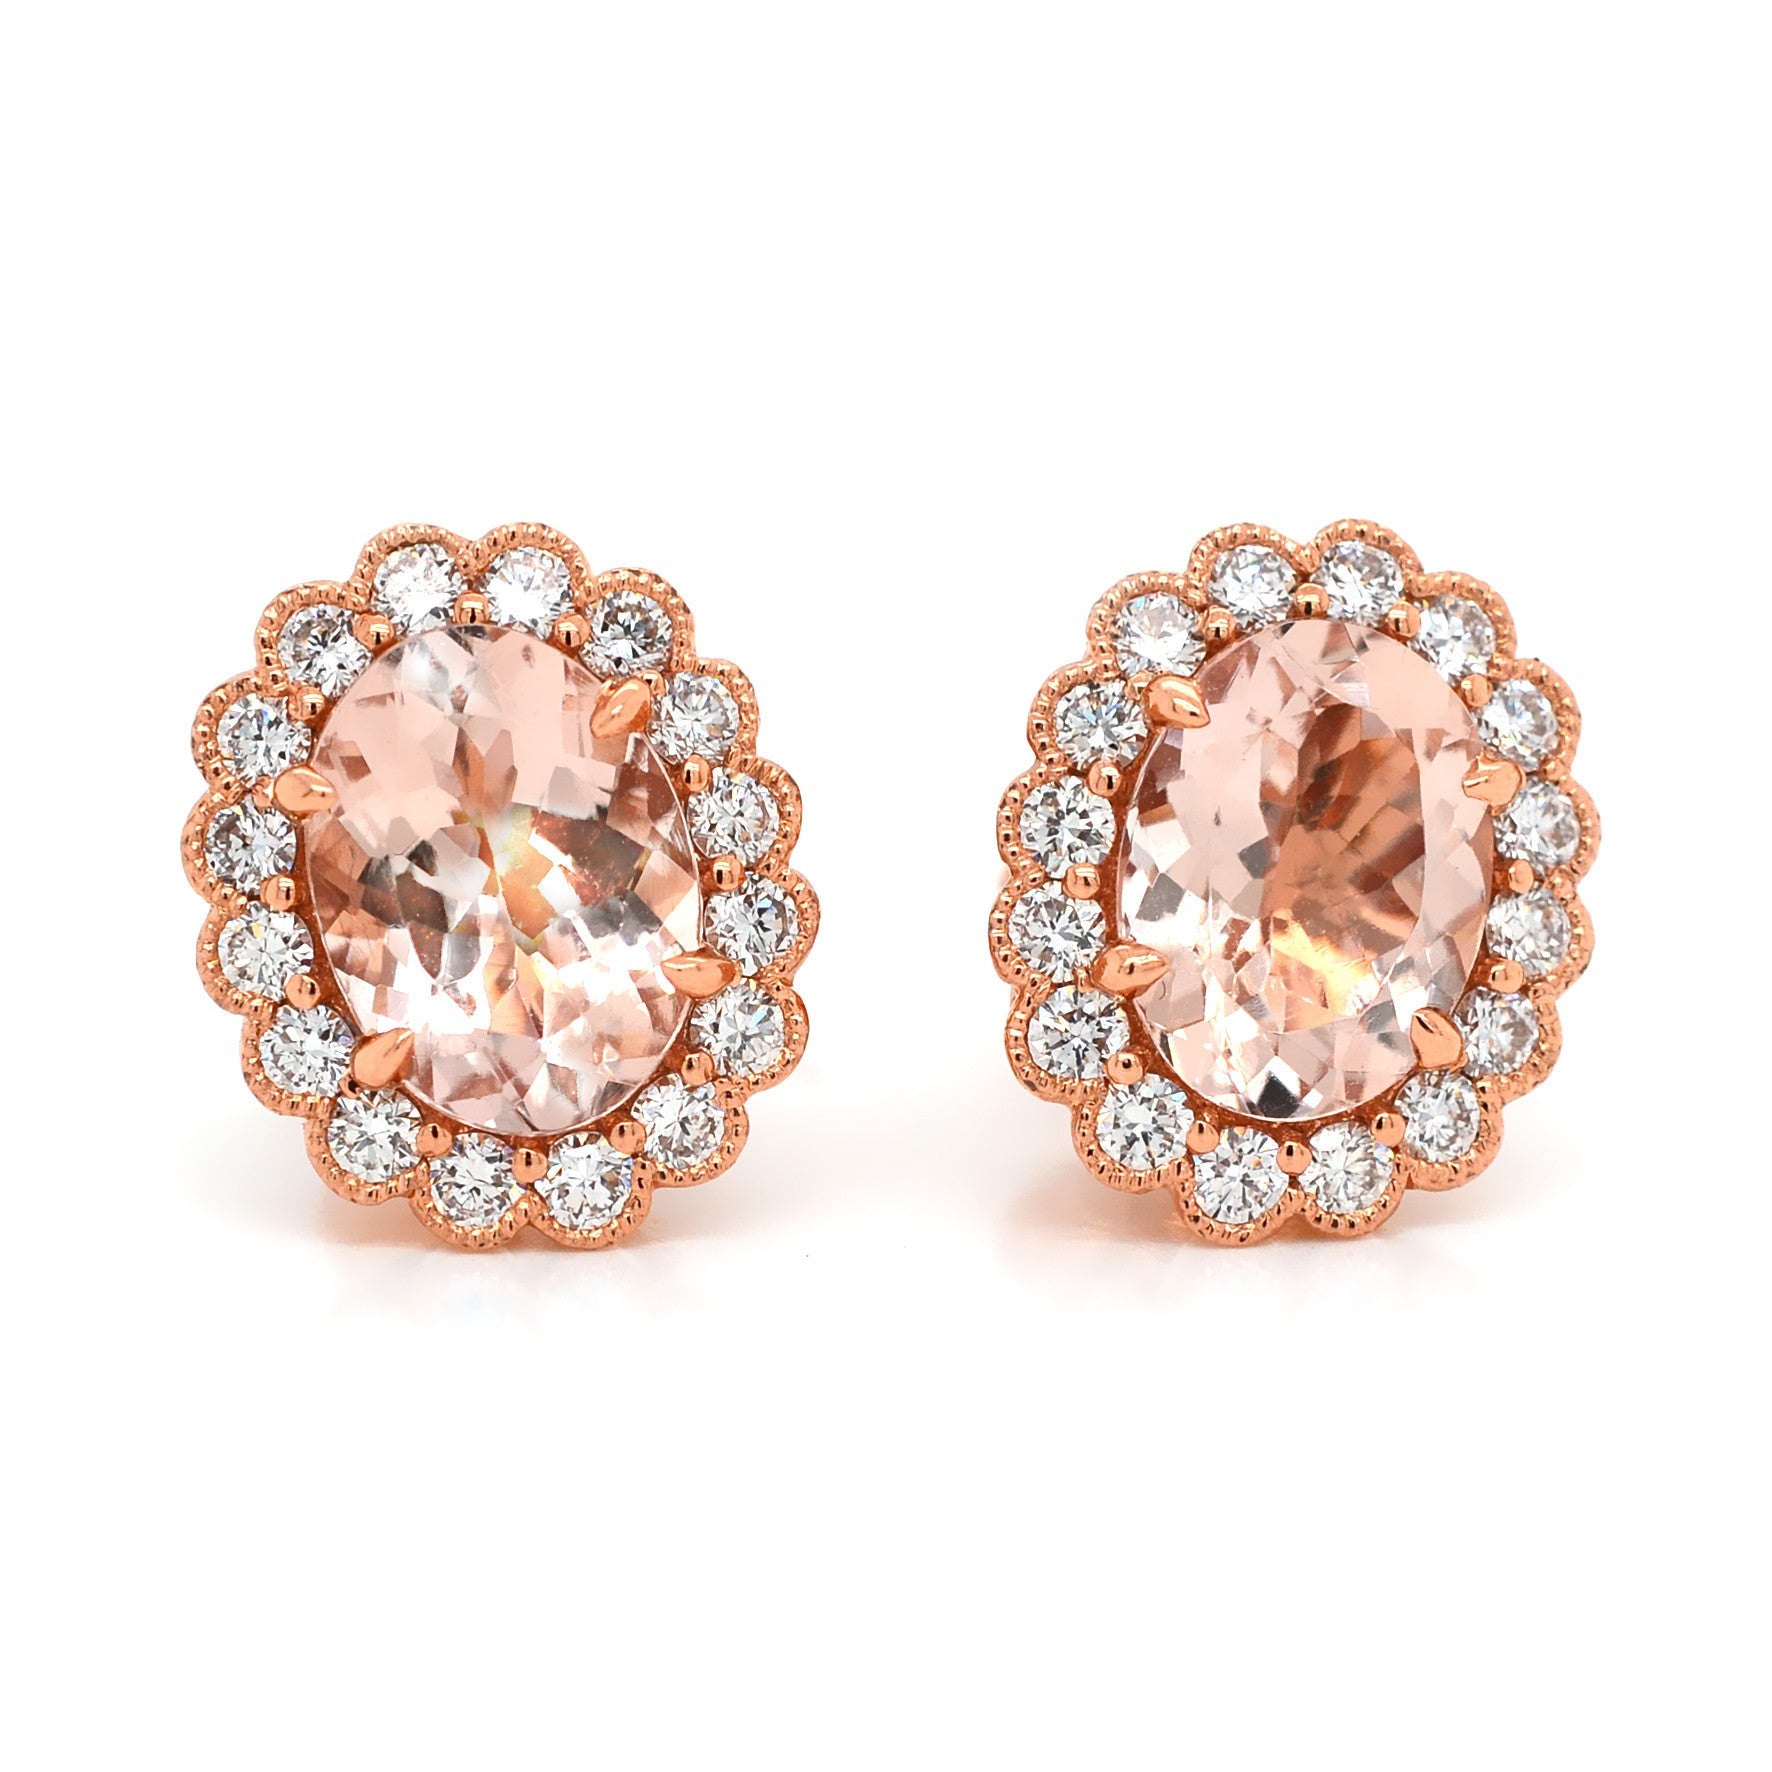 Oval Morganite Stud Earrings with White Diamonds - ForeverJewels Design Studio 8